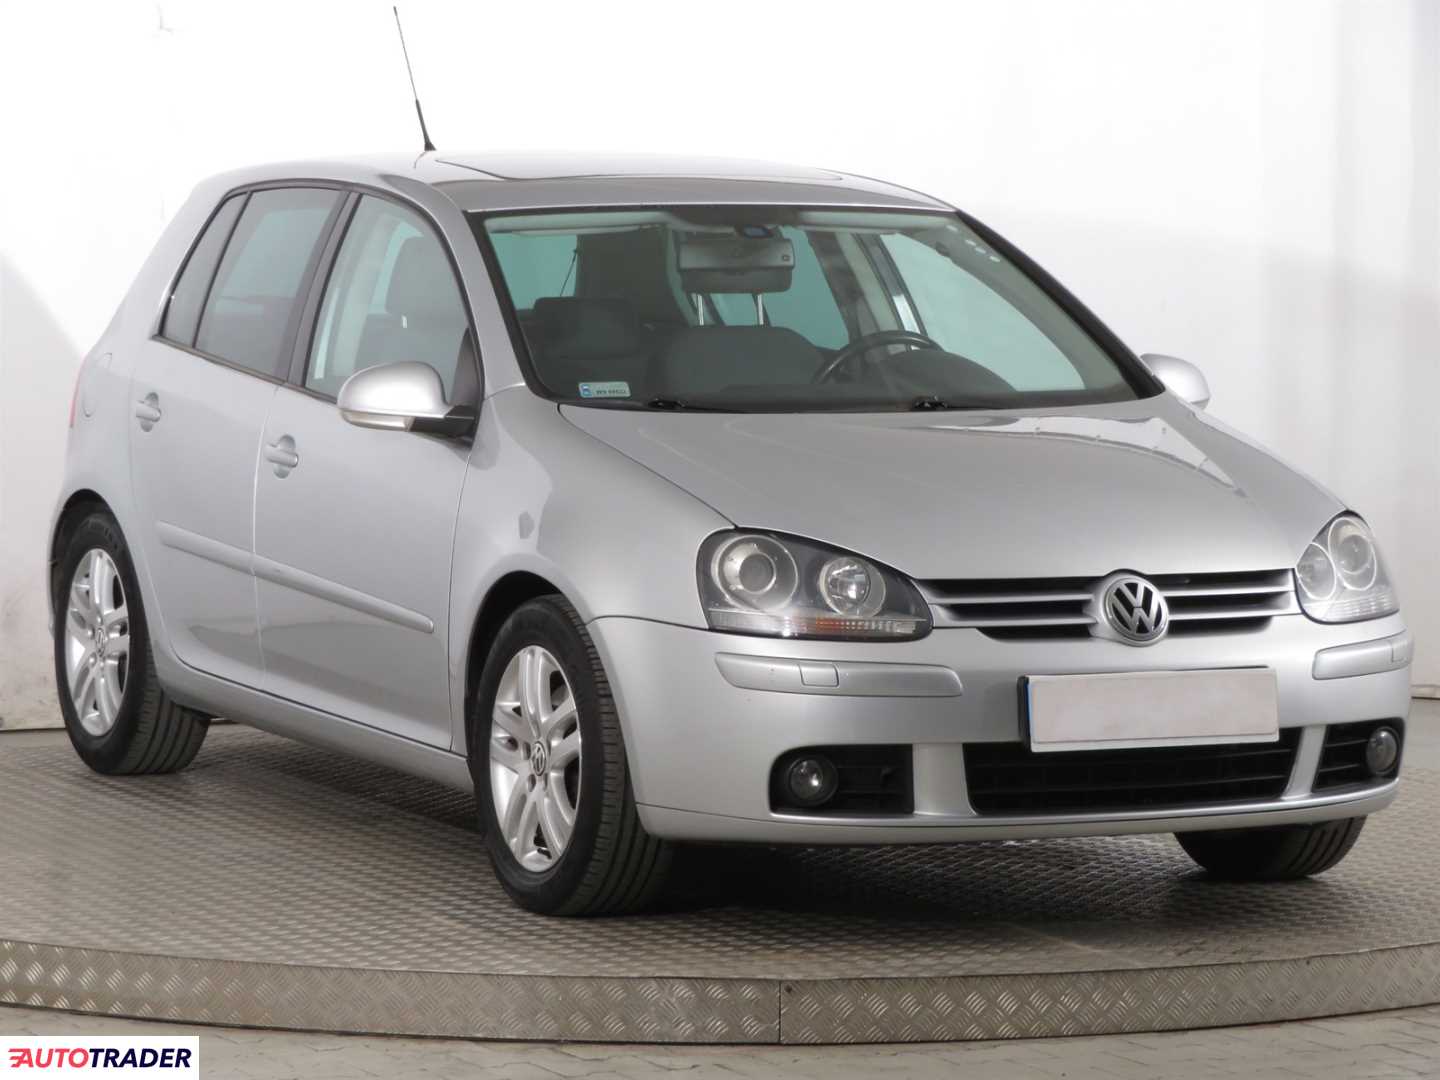 Volkswagen Golf 2008 1.4 138 KM